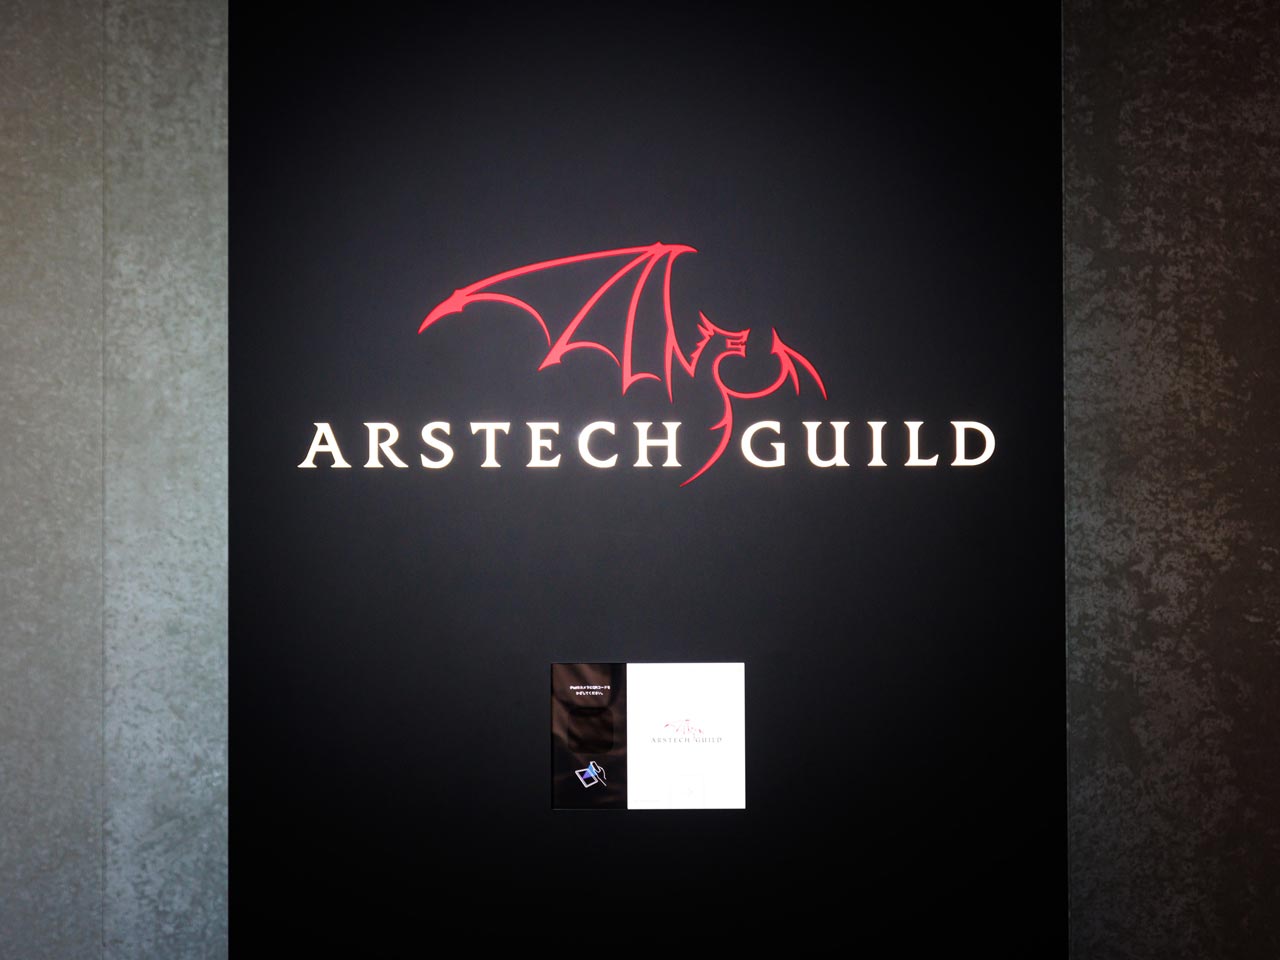 ARSTECH GUILDは、ハイクオリティなゲーム開発を提供するエンタメ技術集団だ。